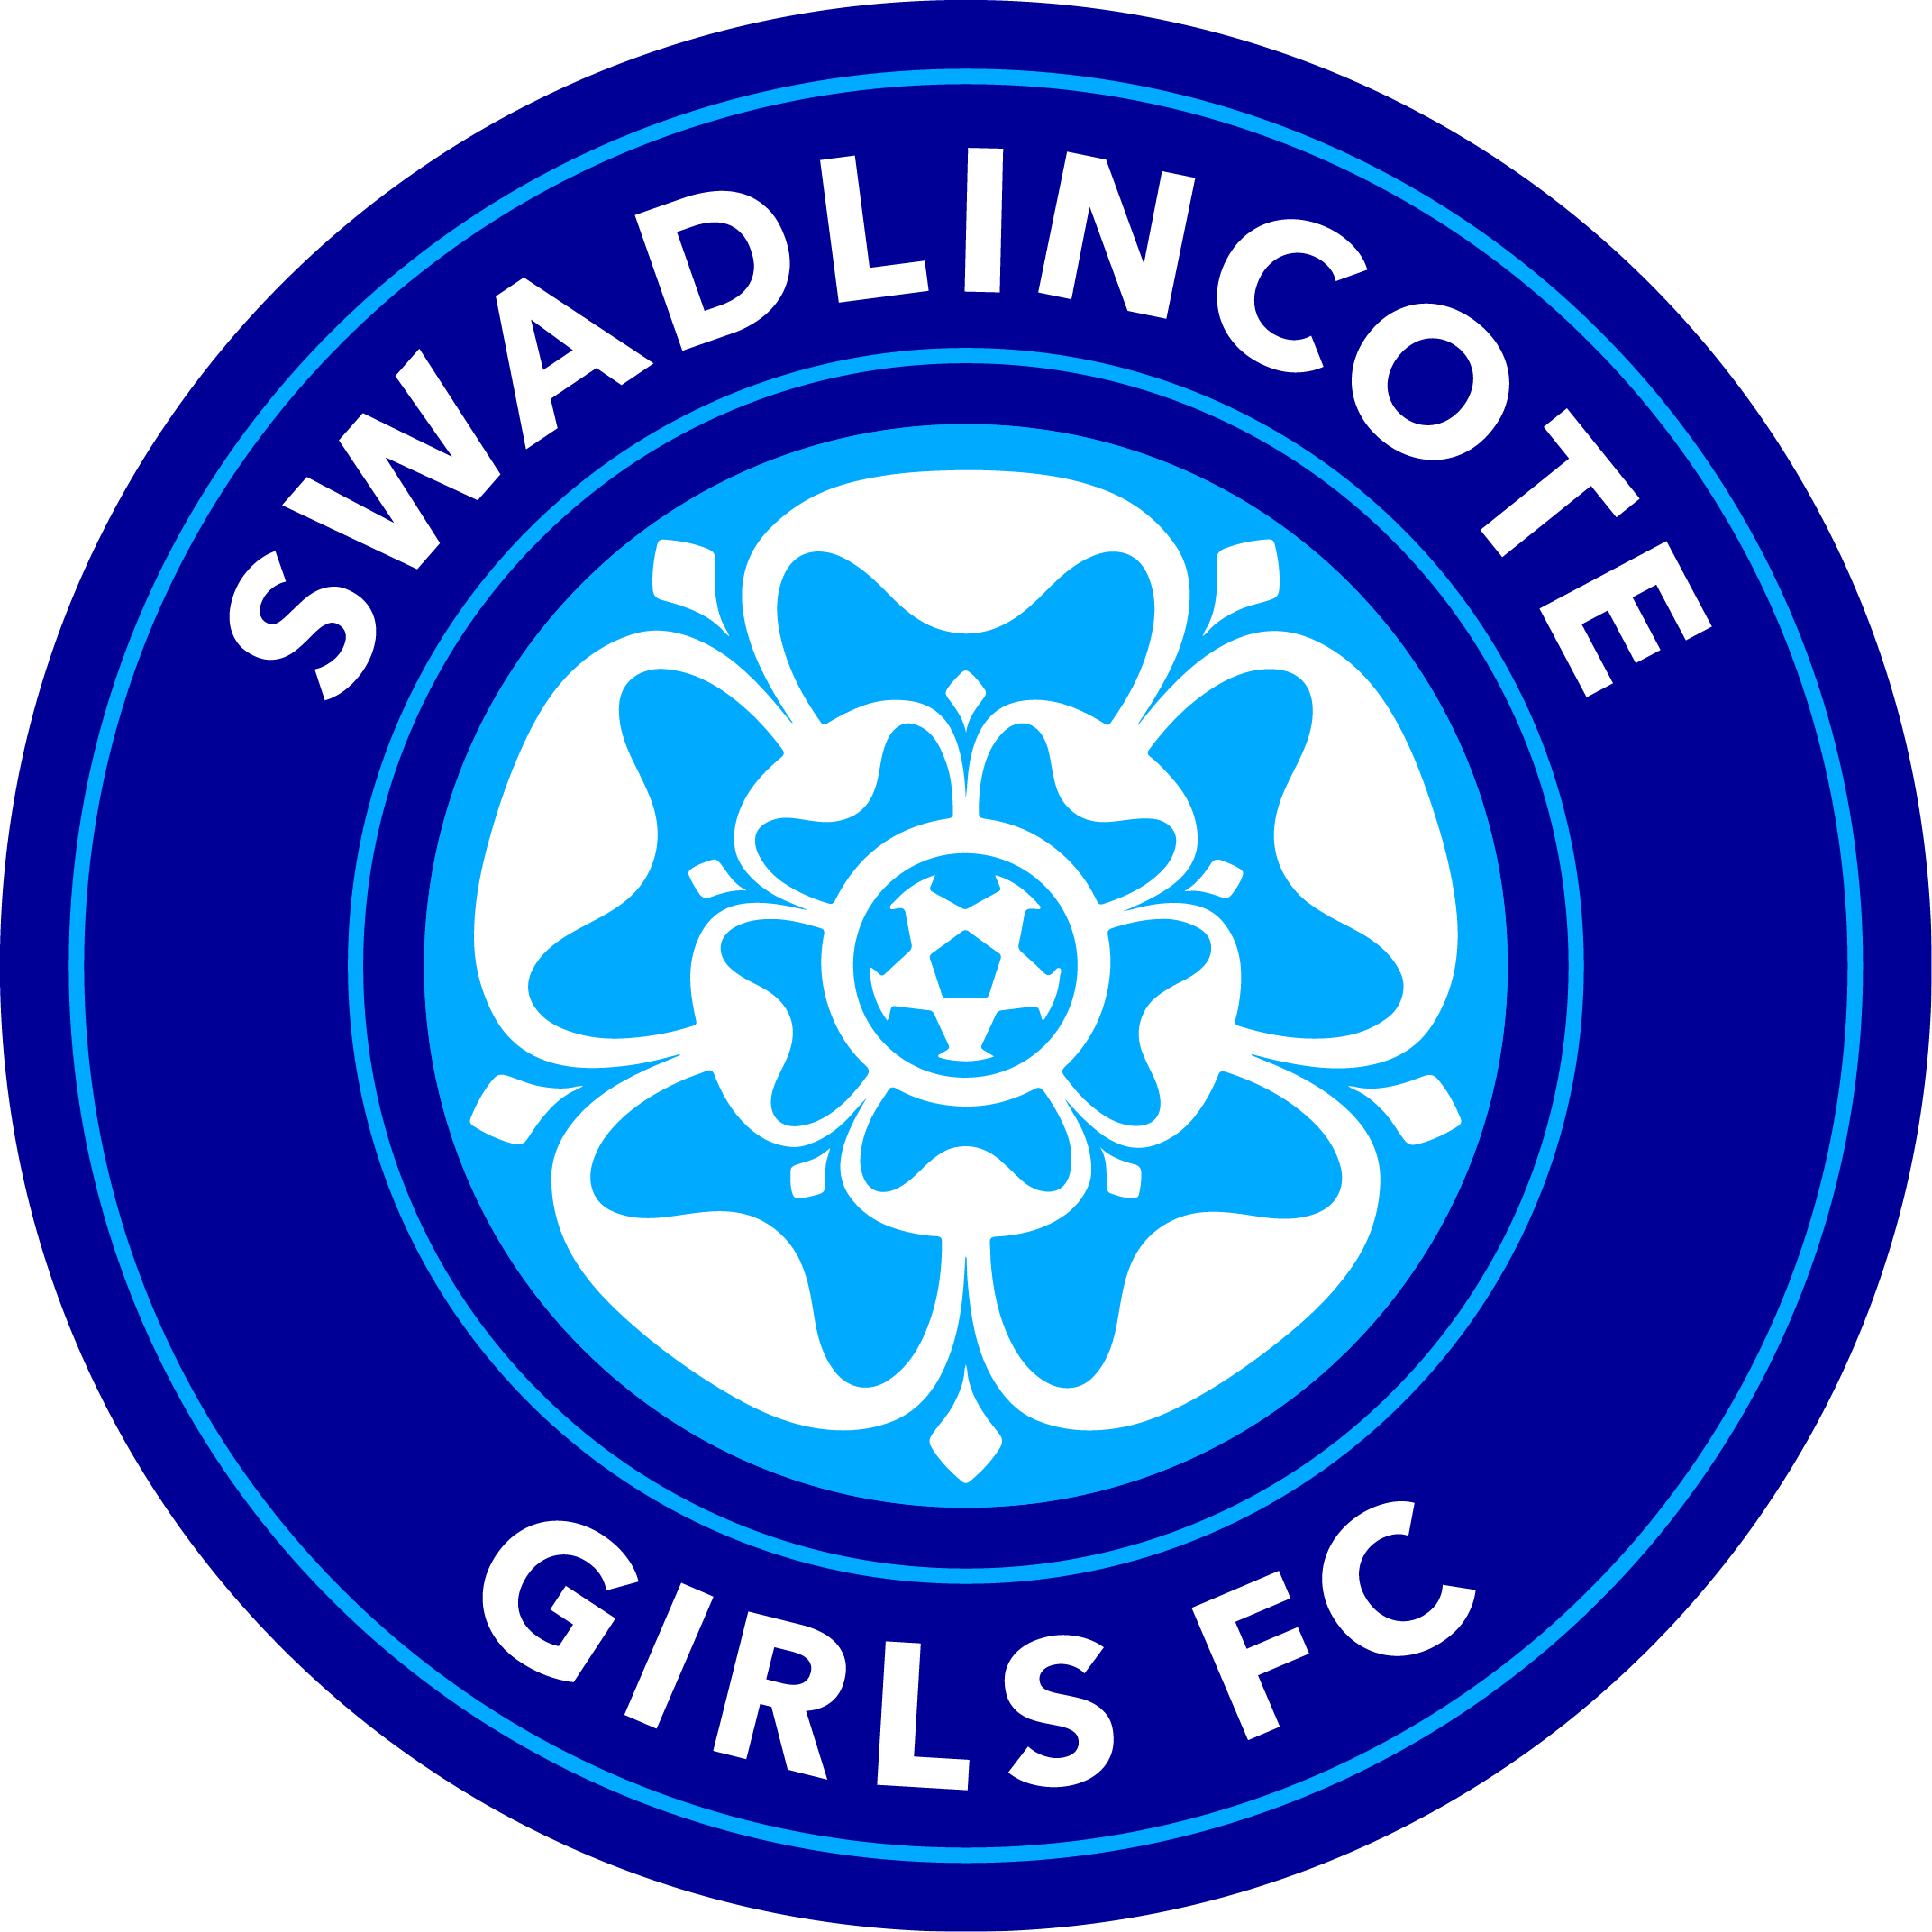 Swadlincote Girls Football Club logo